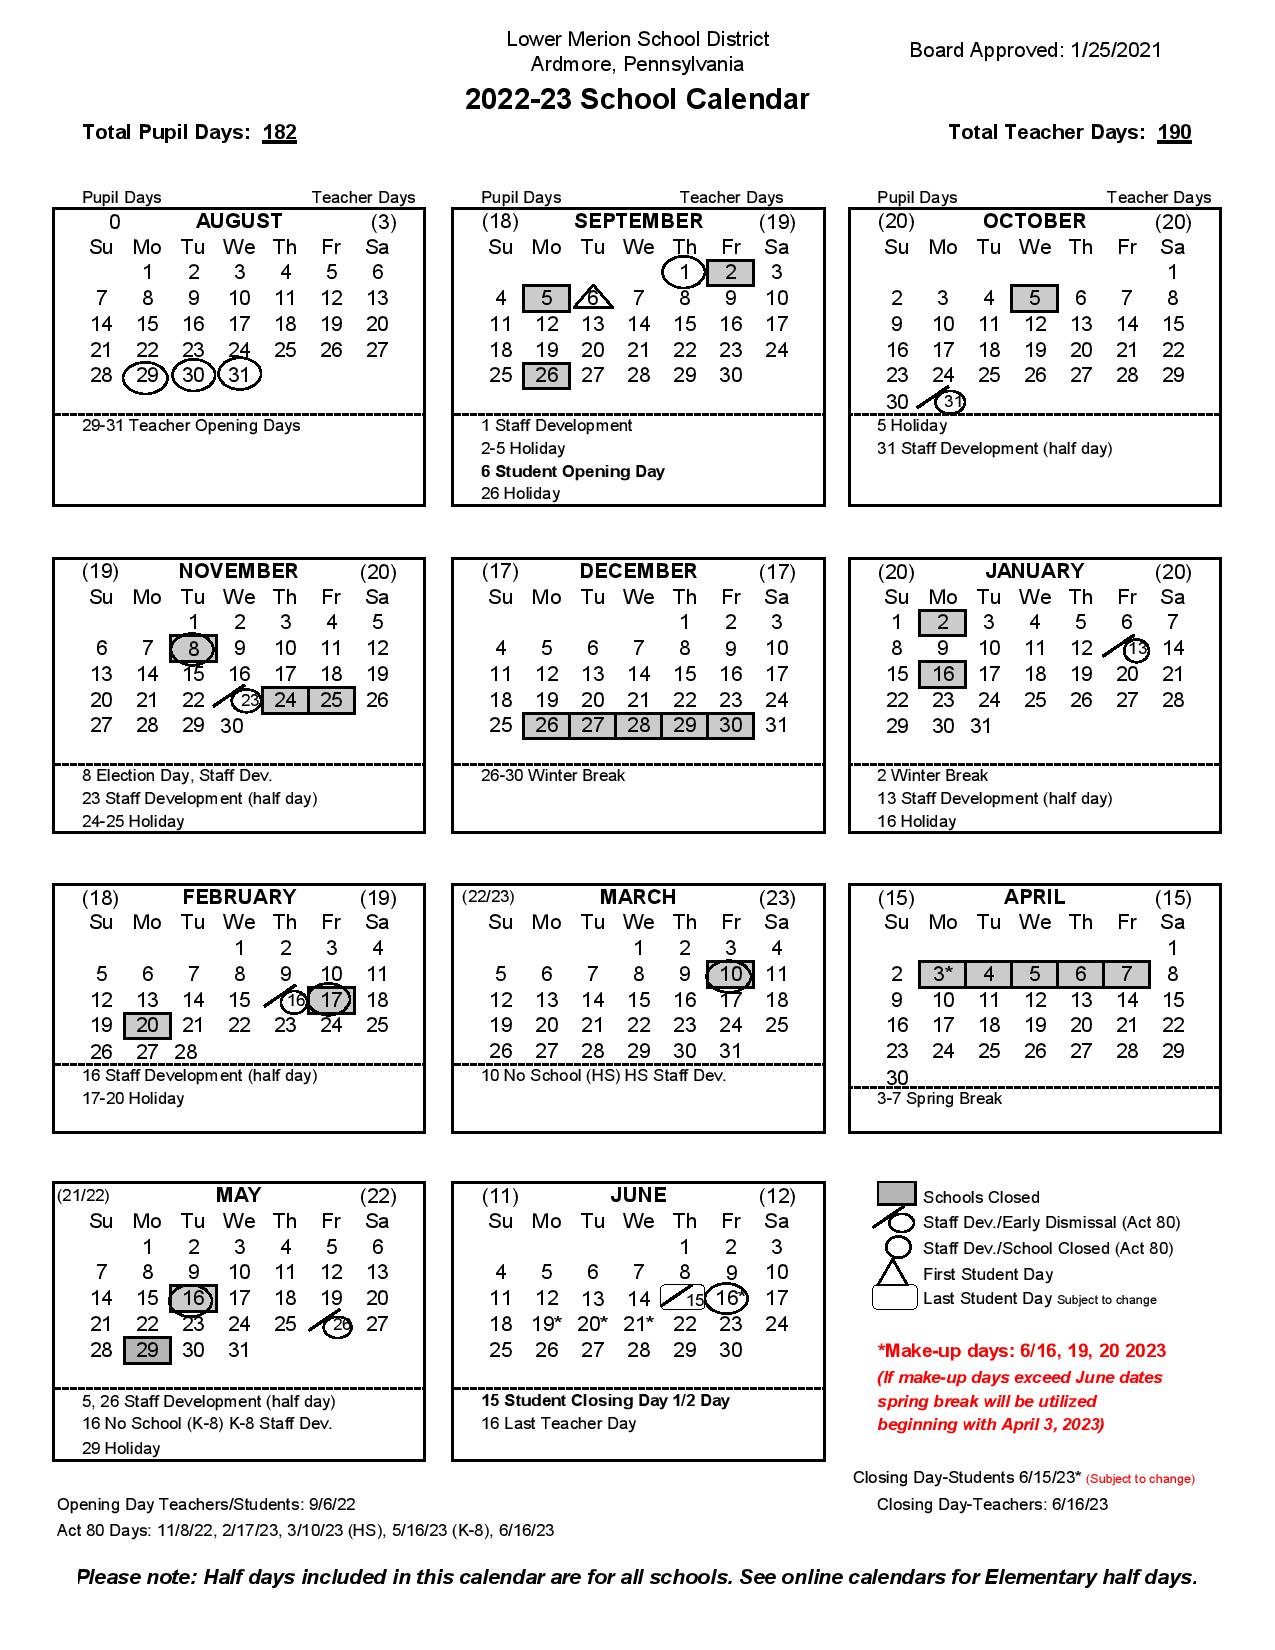 Lower Merion School District Calendar 2022-2023 in PDF